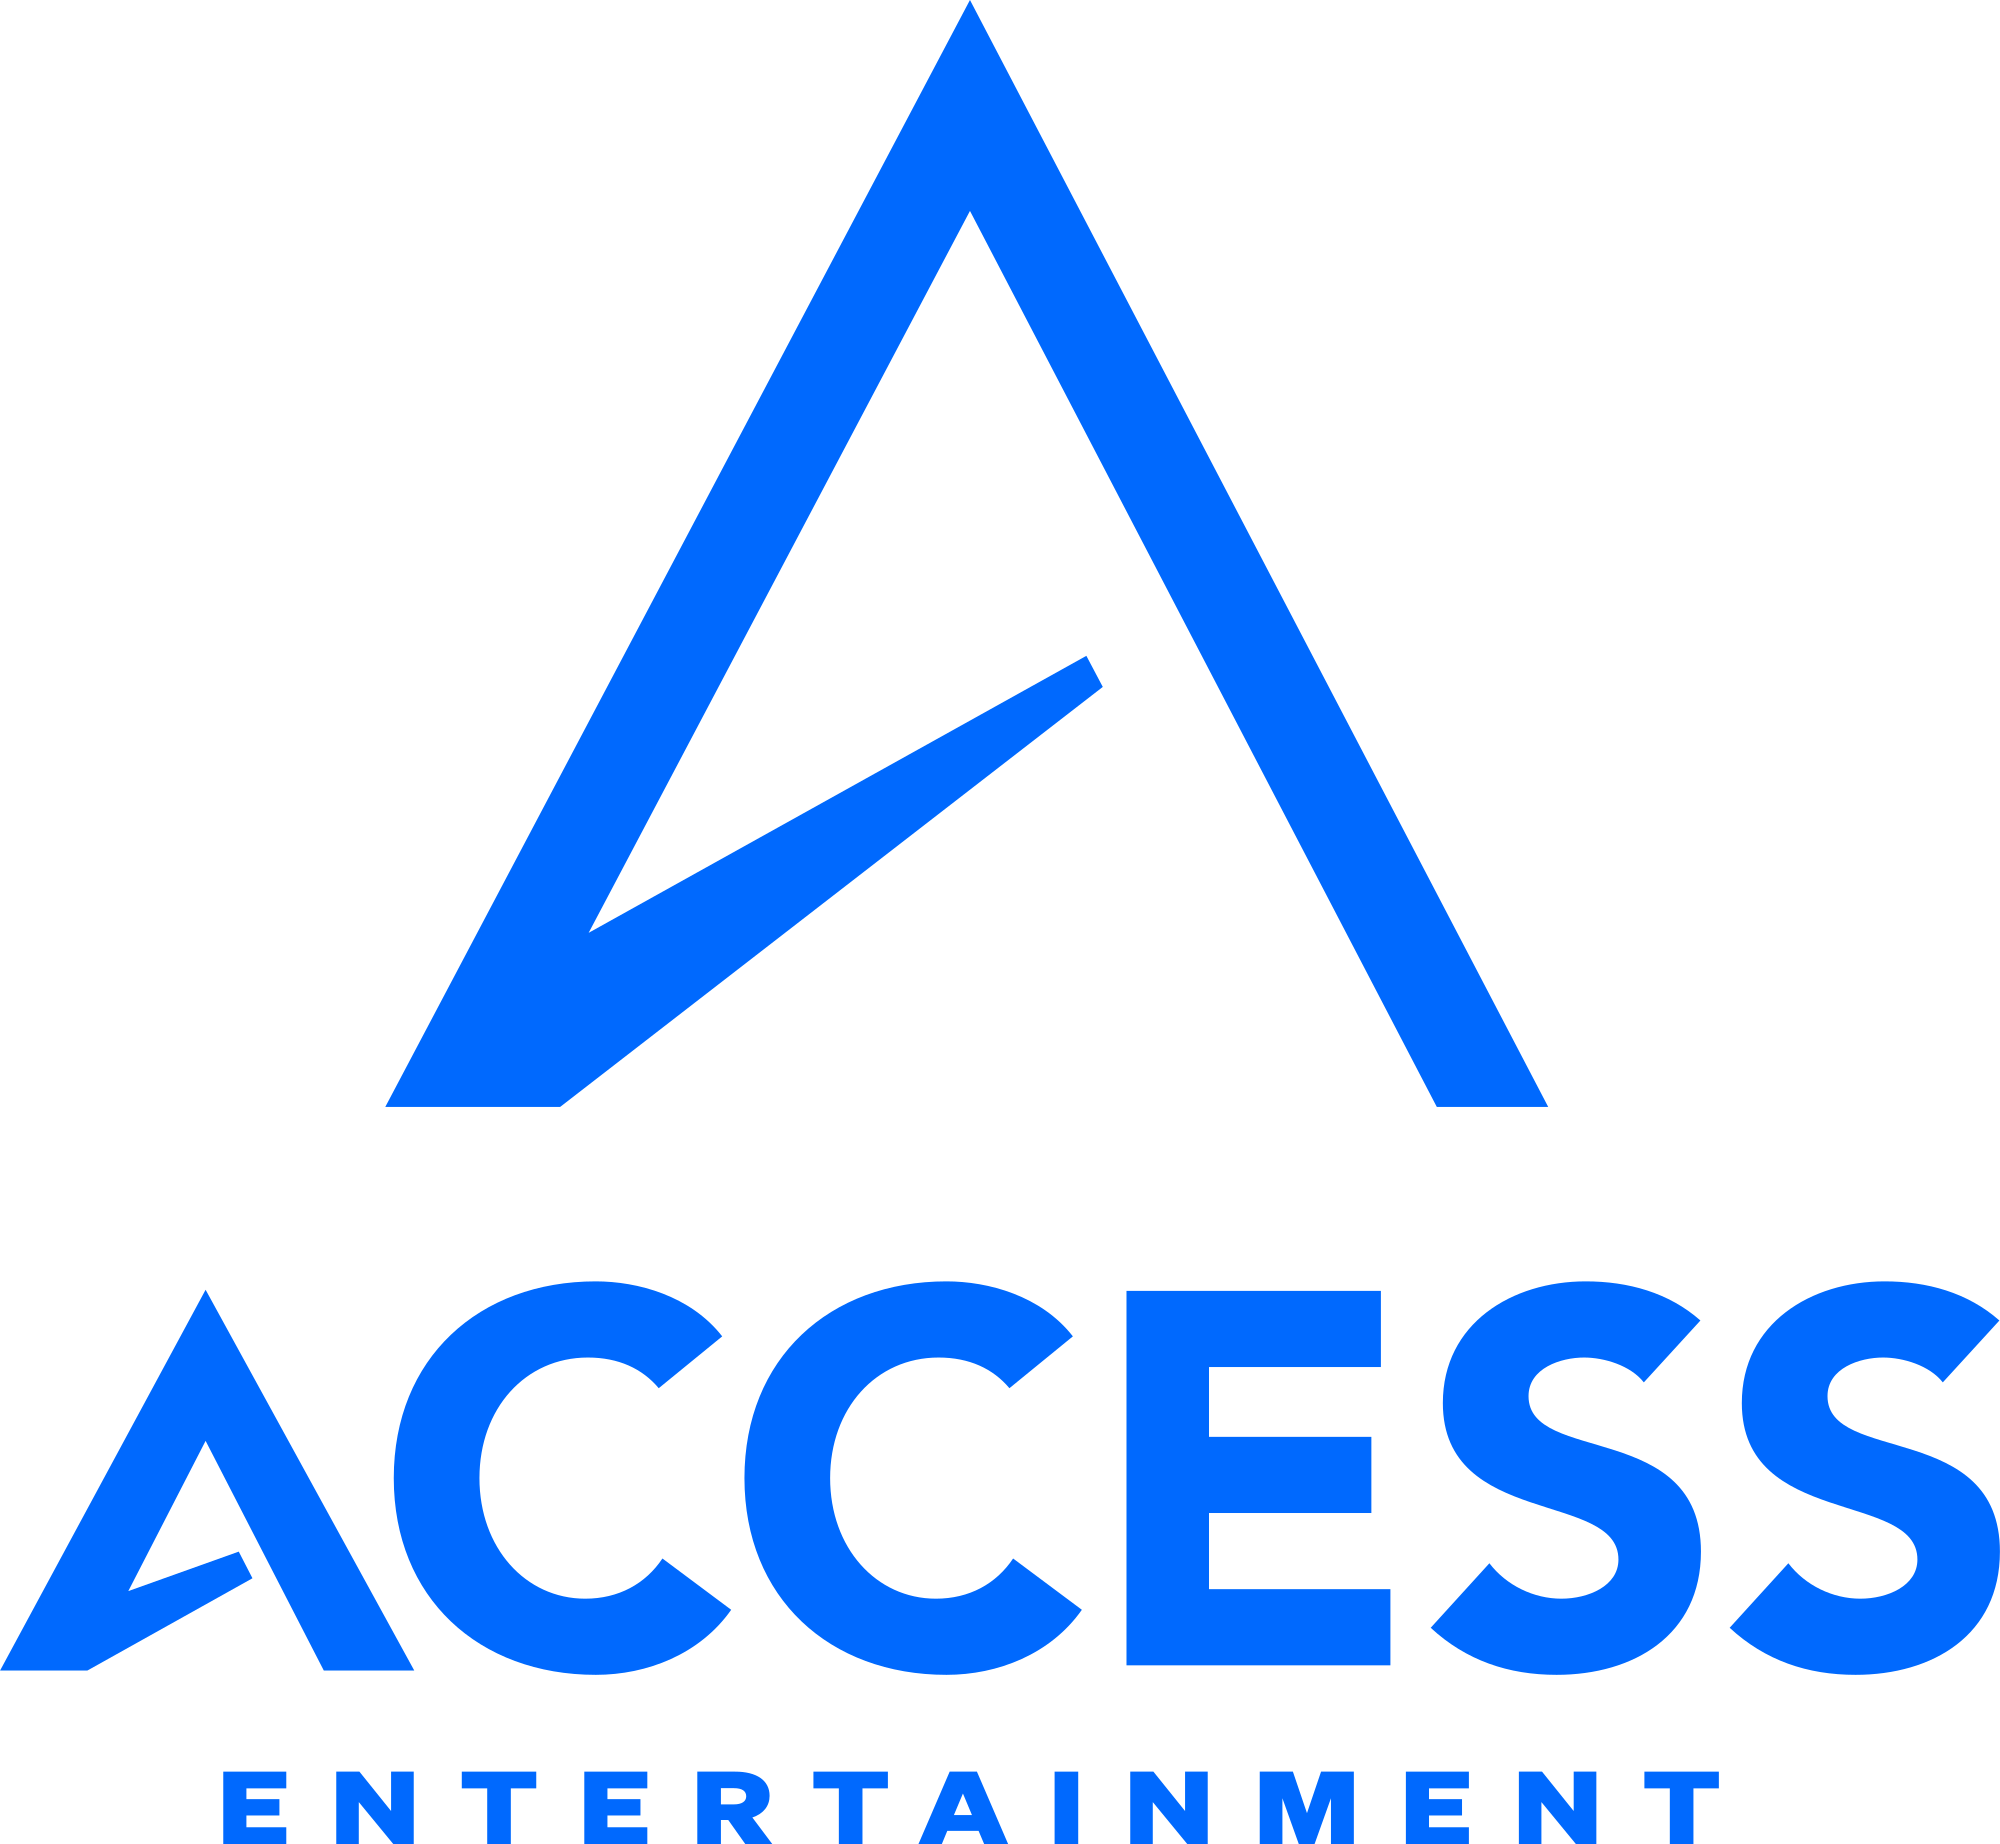 Access Entertainment